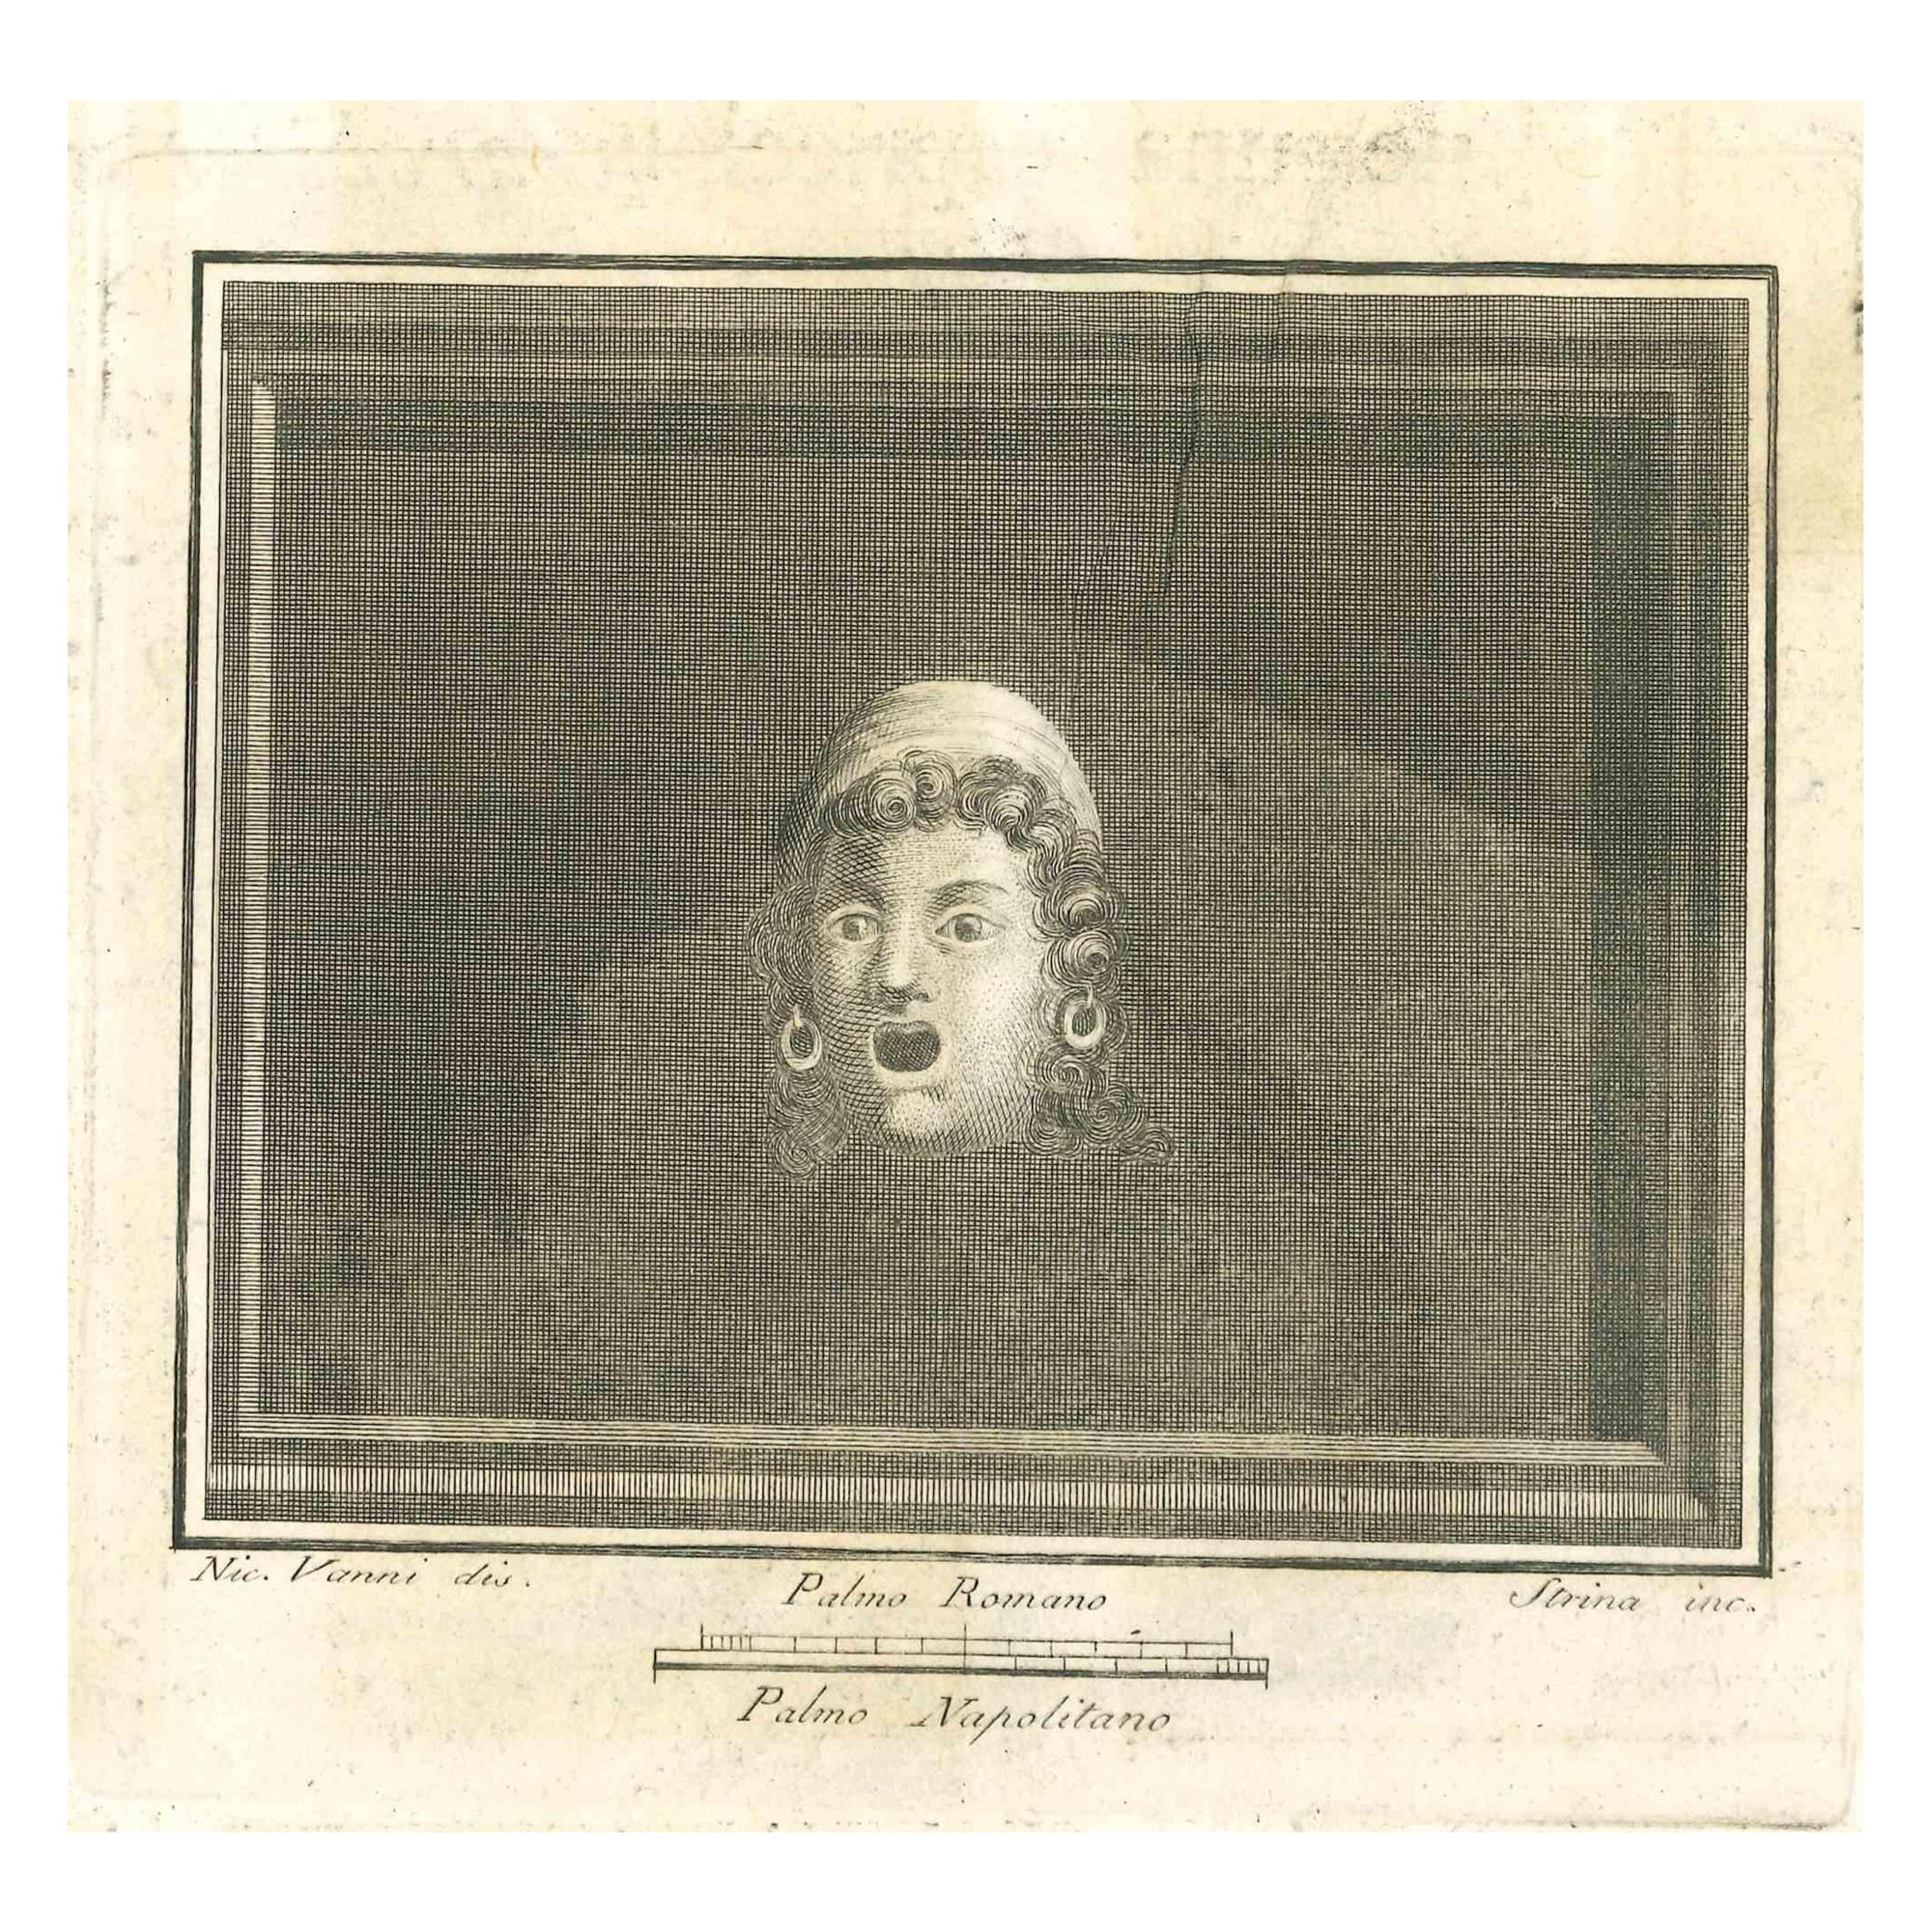 Niccolò Vanni Figurative Print - Ancient Theatrical Mask - Etching  - 18th Century